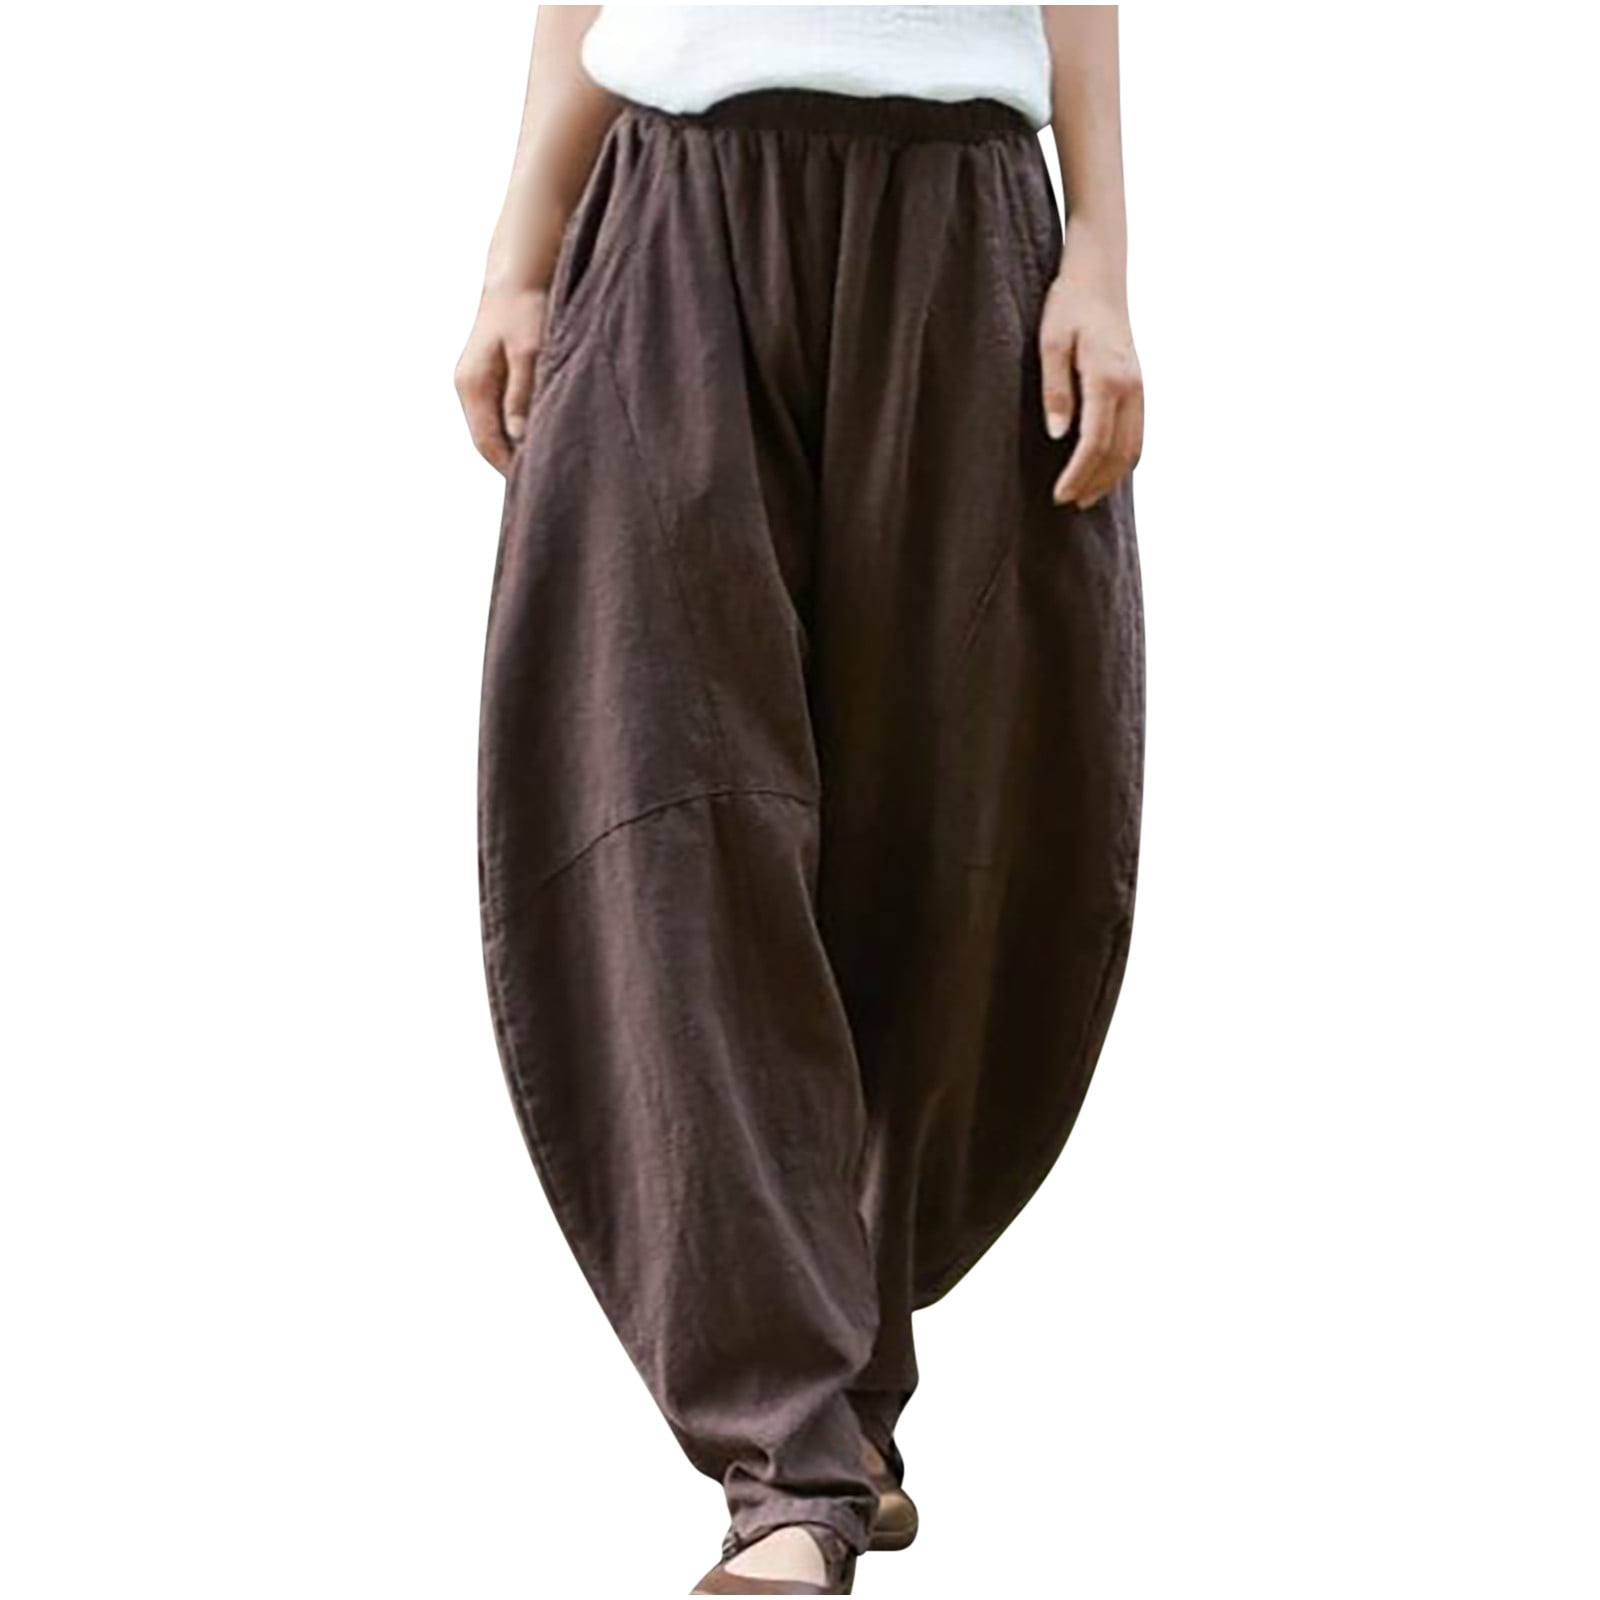 Short Harem Pants / Brown Drop Crotch Pants / Yoga Pants / Funky